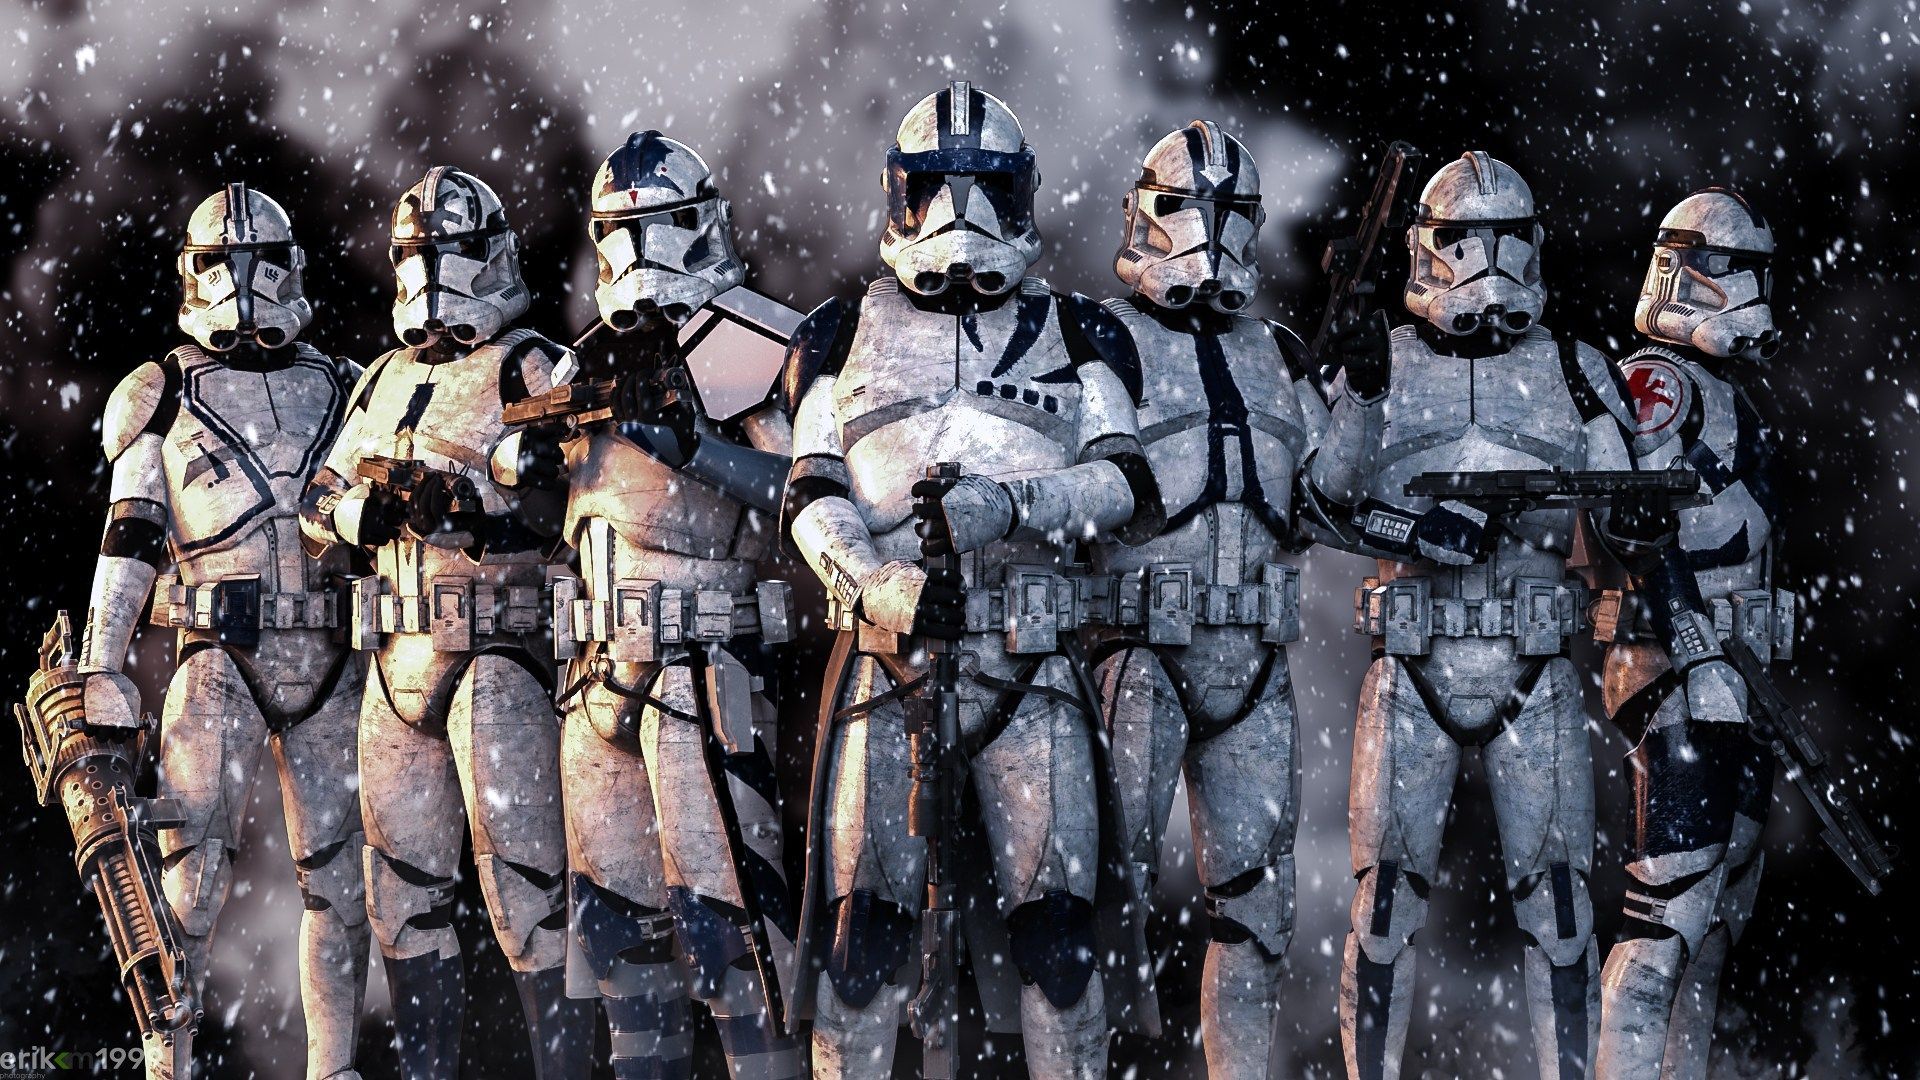 star wars clone wars animated wallpaper